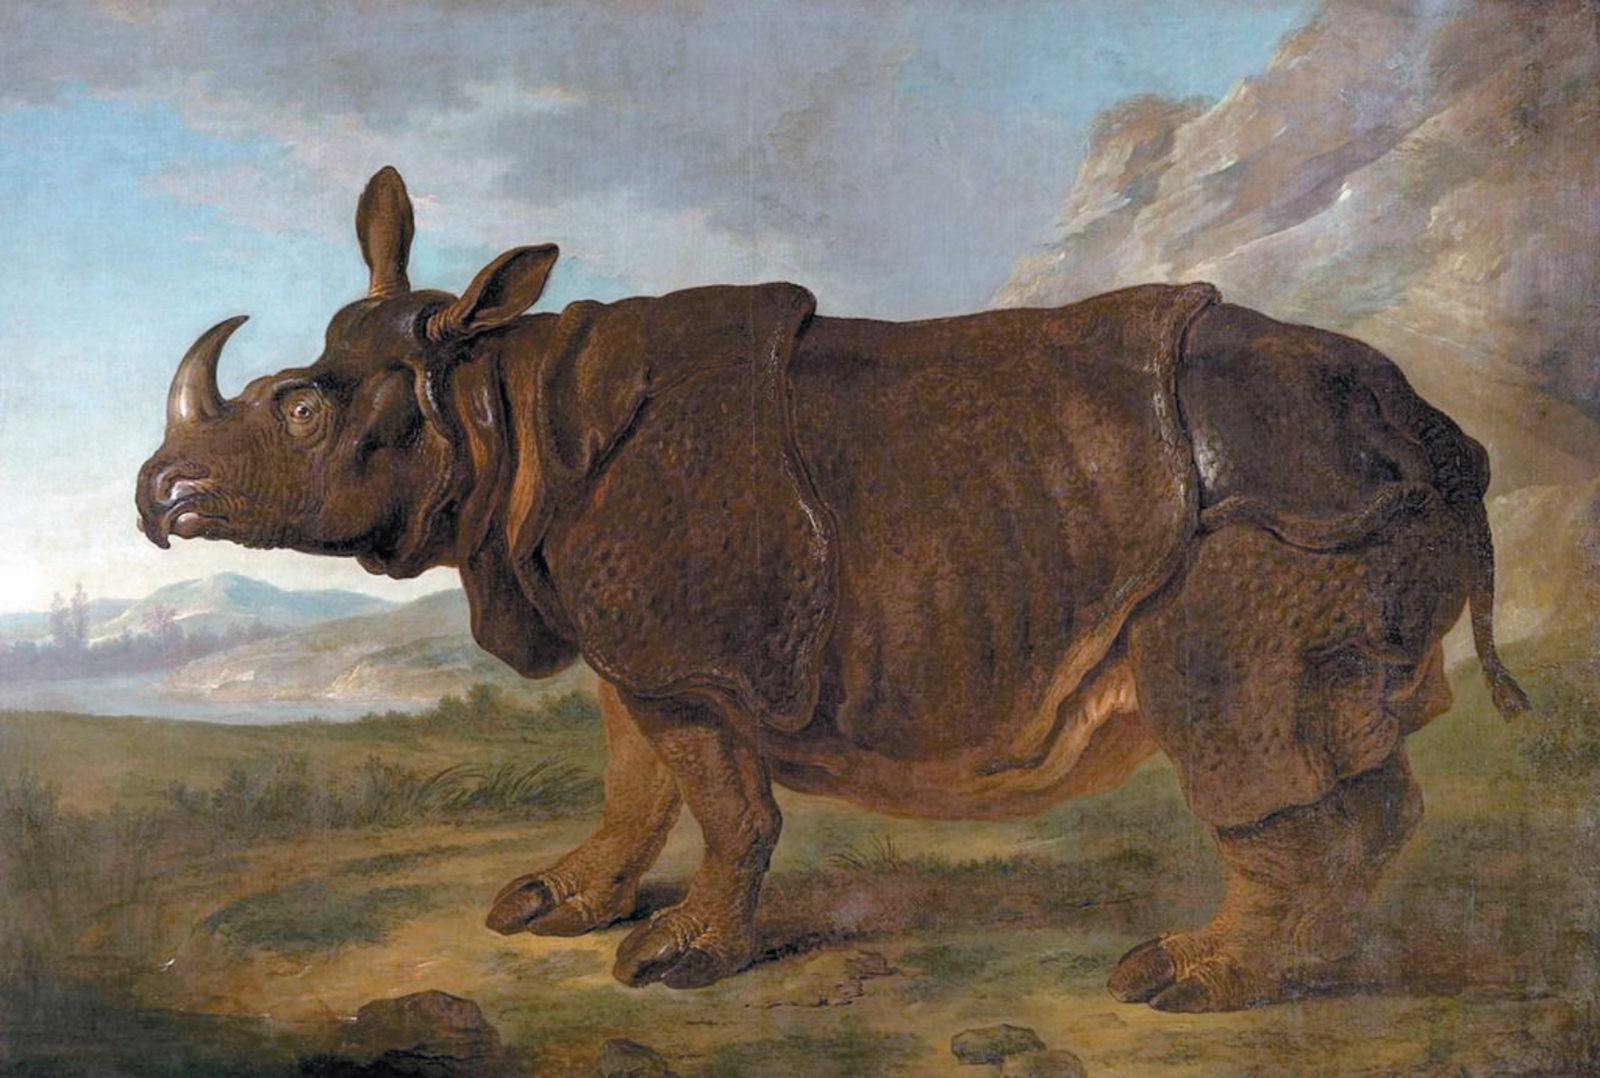 The Rhinos